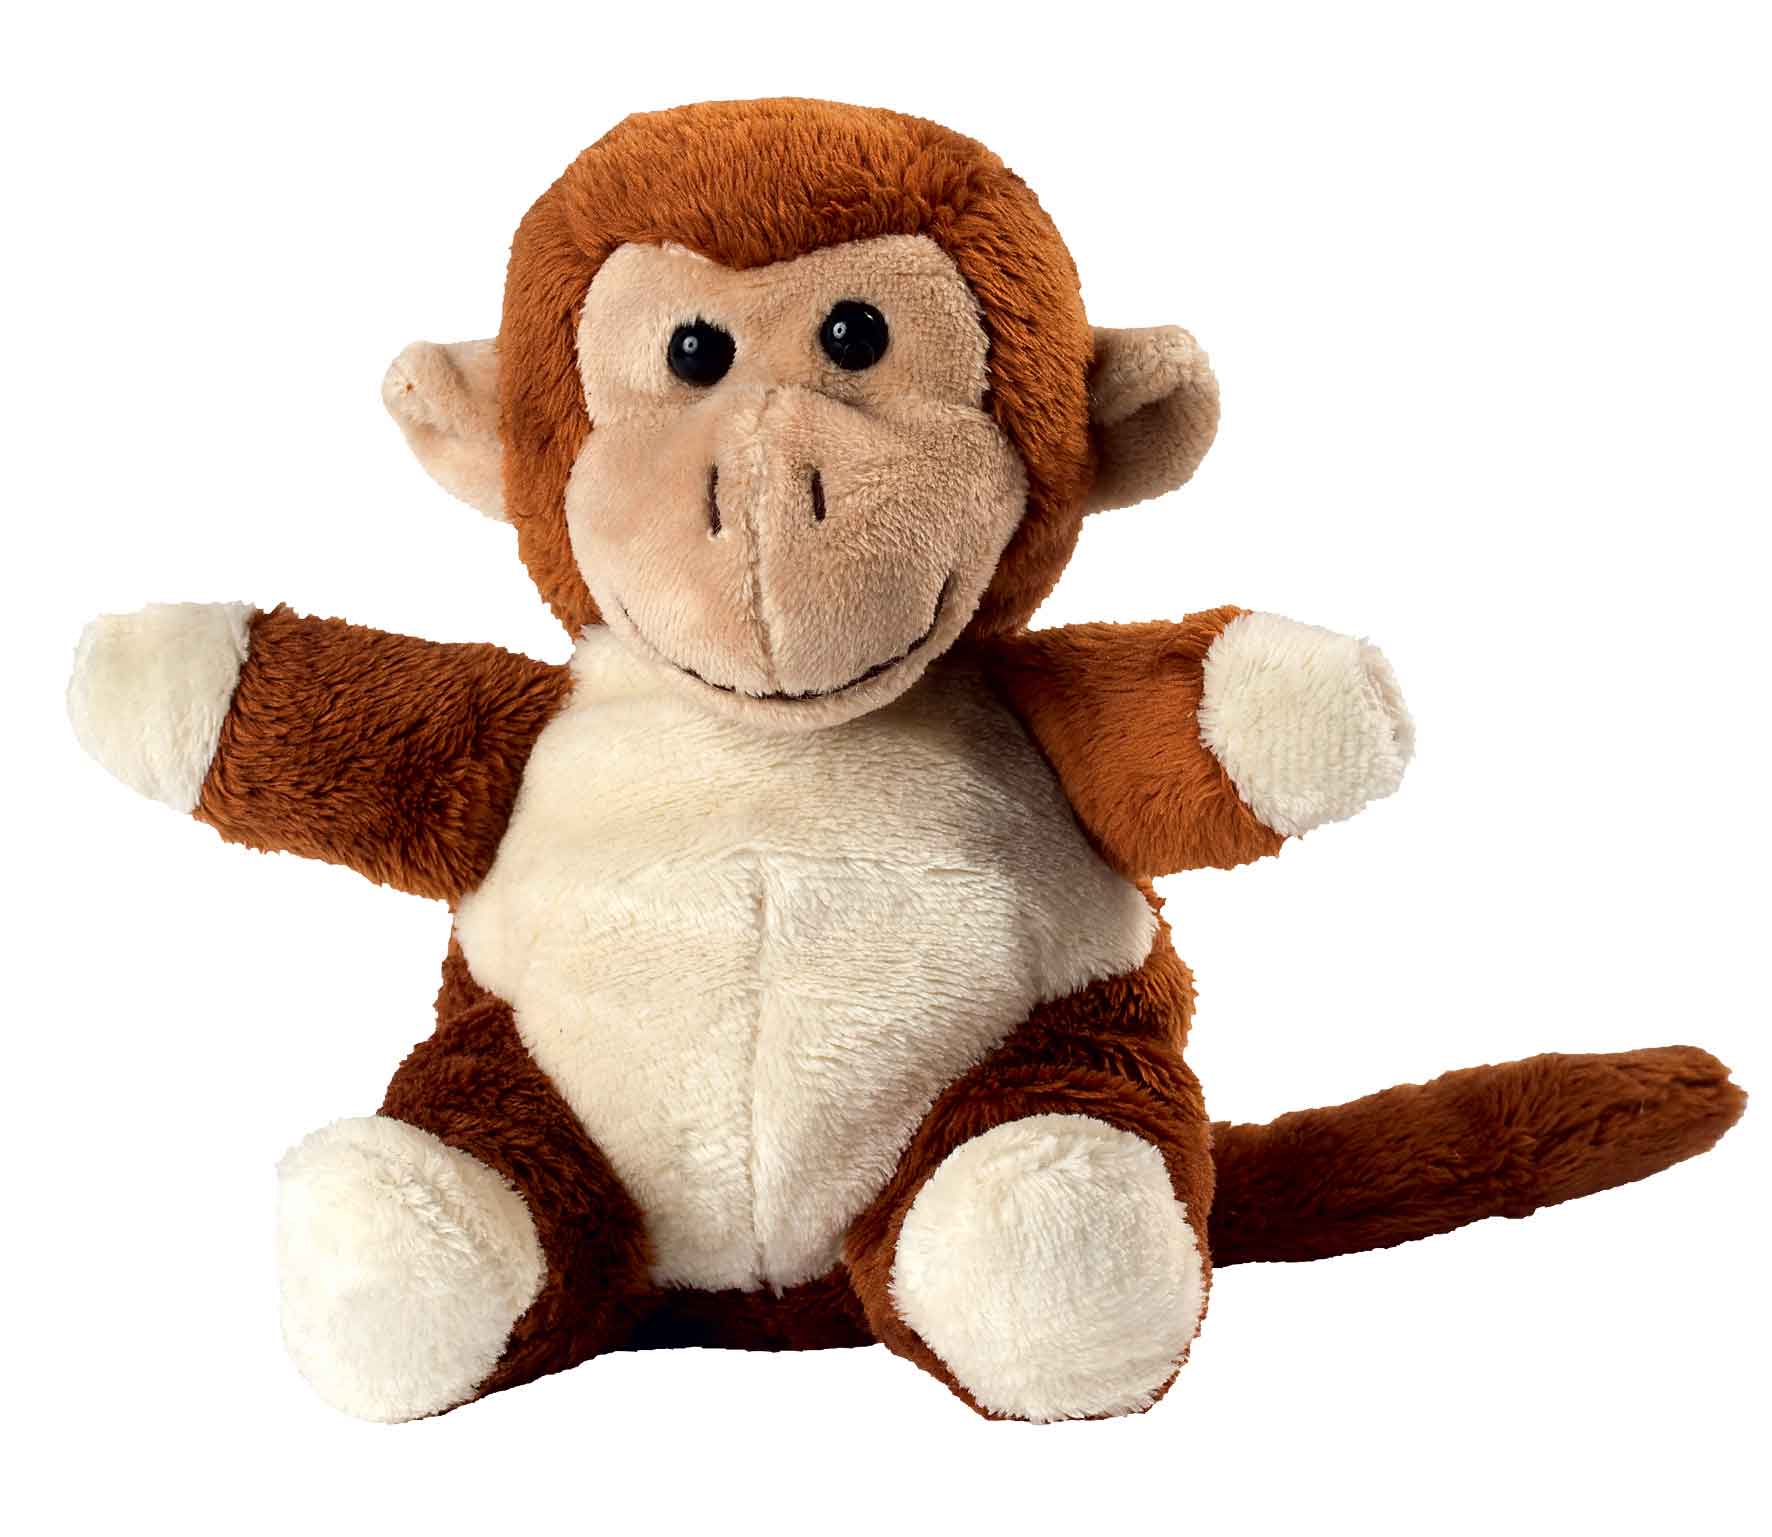 Plush monkey Erik